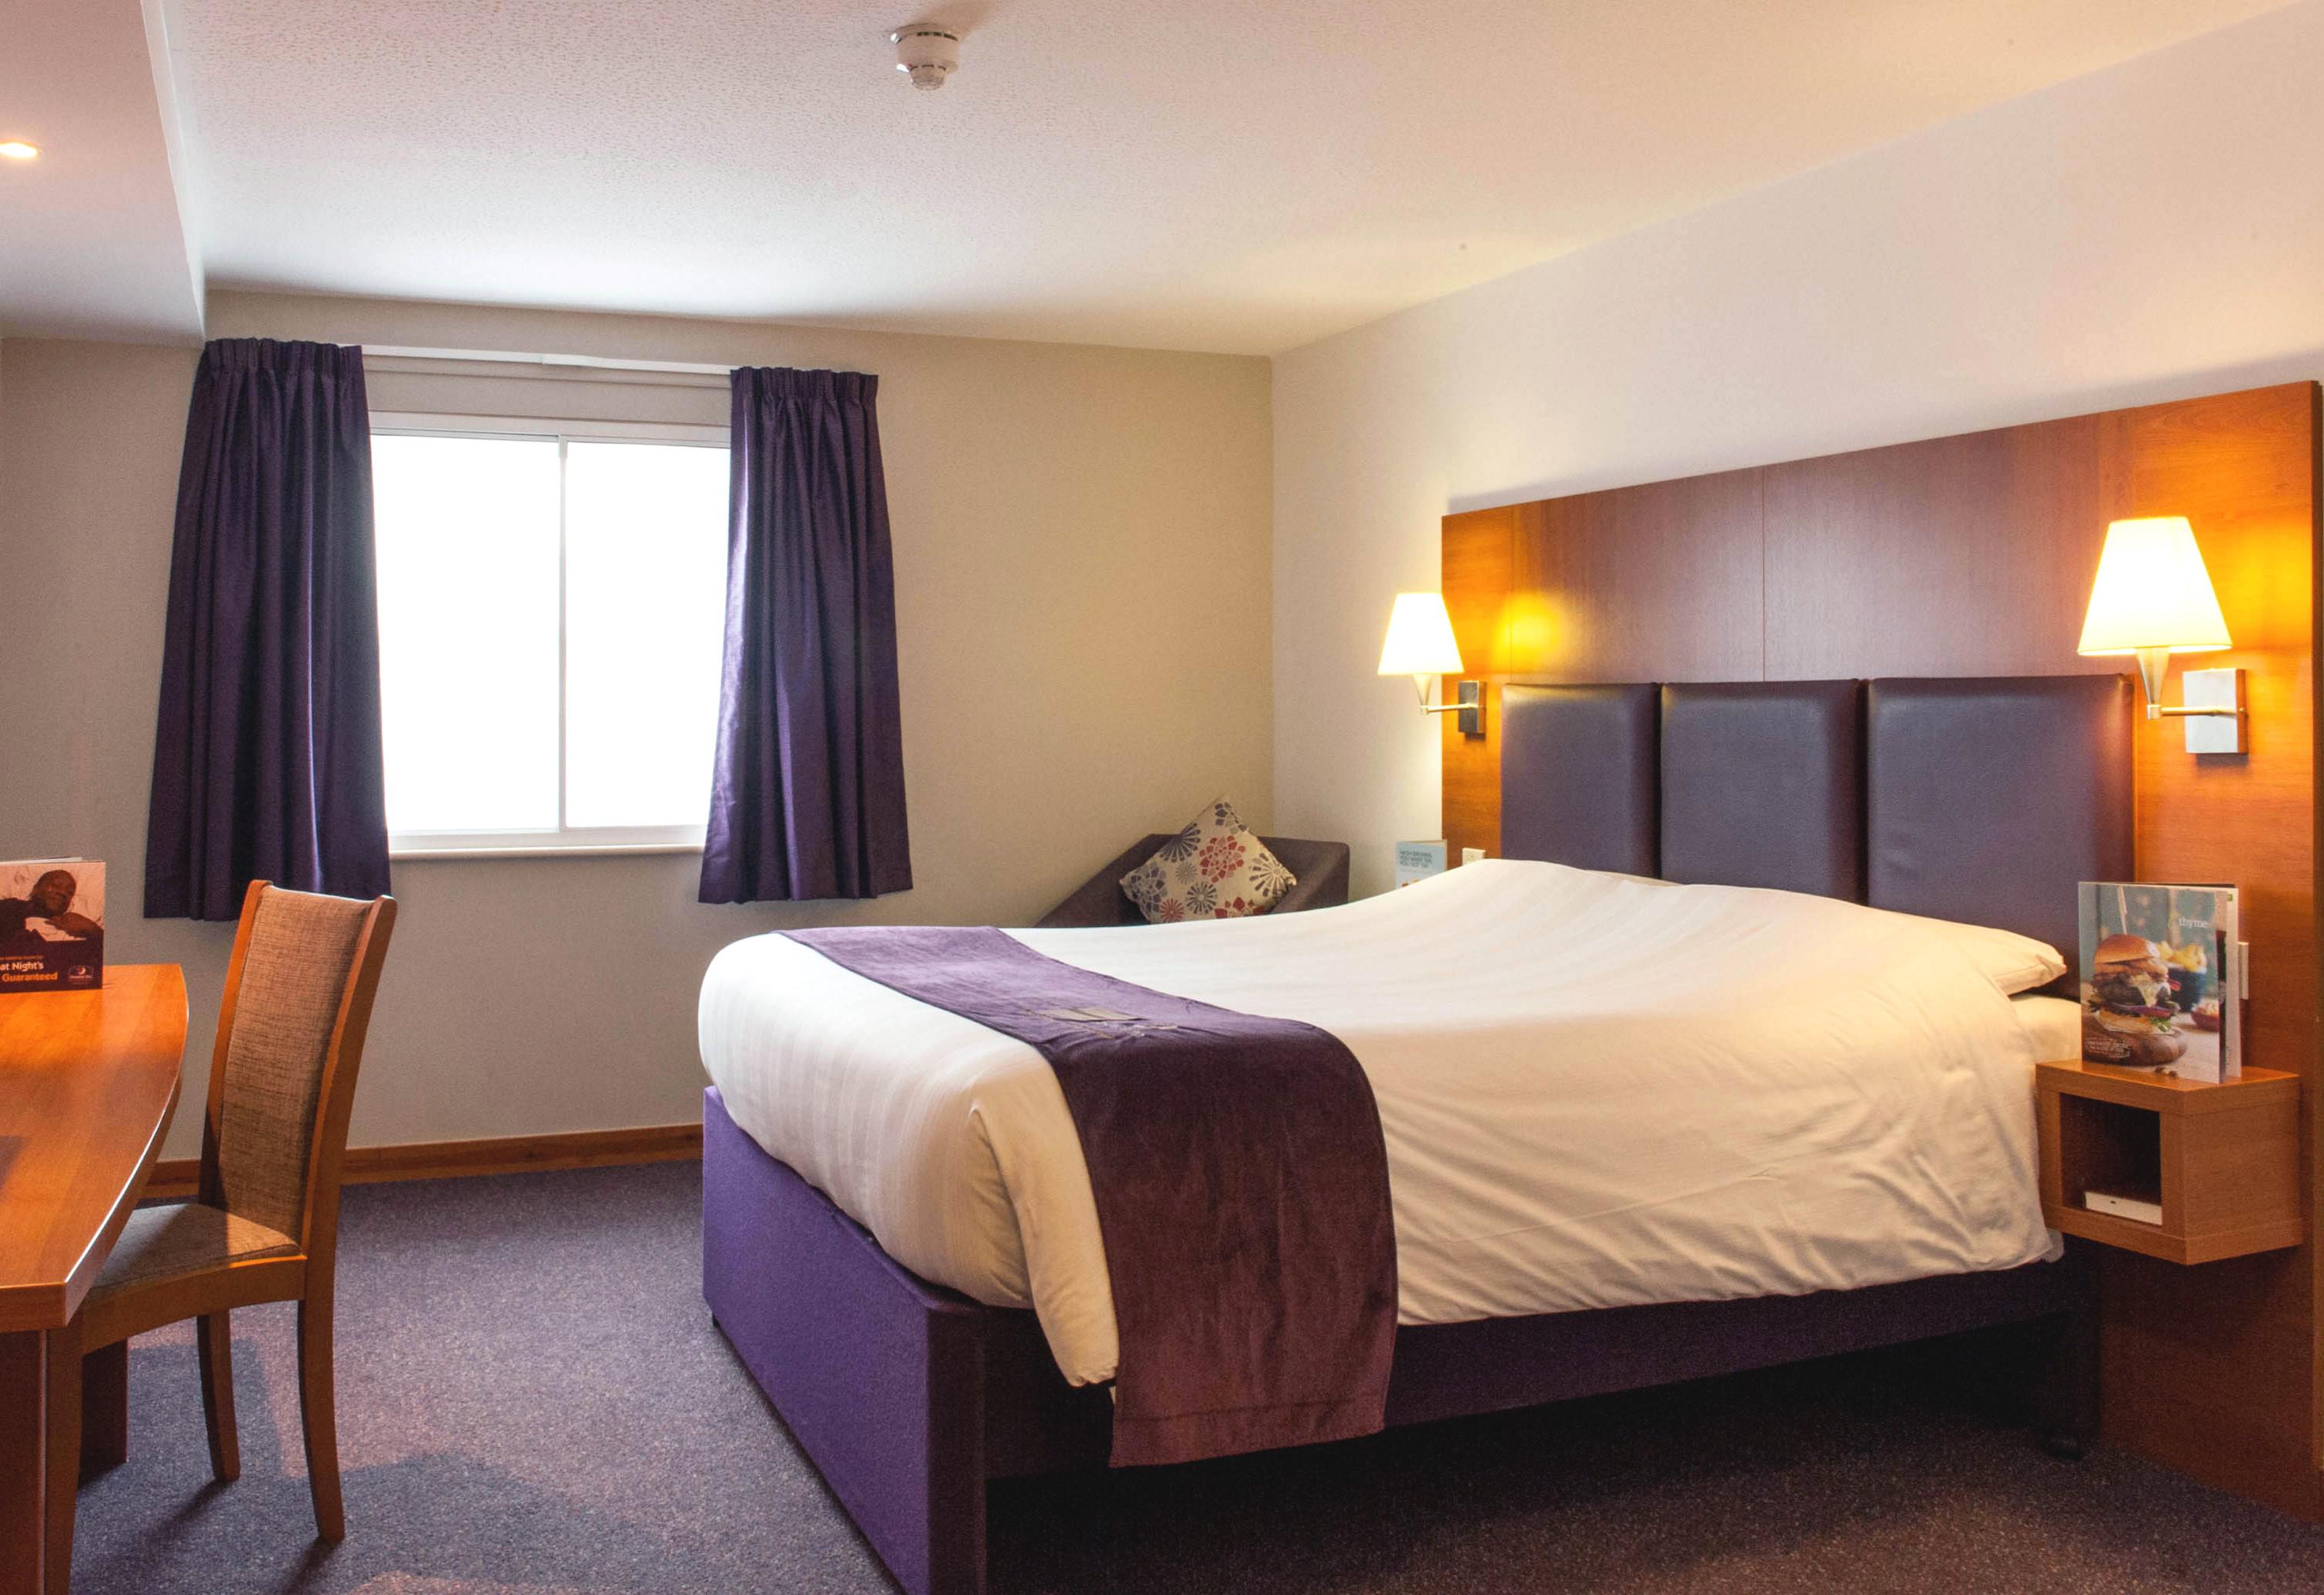 Premier Inn bedroom Premier Inn Ayr/Prestwick Airport hotel Ayr 03337 773674